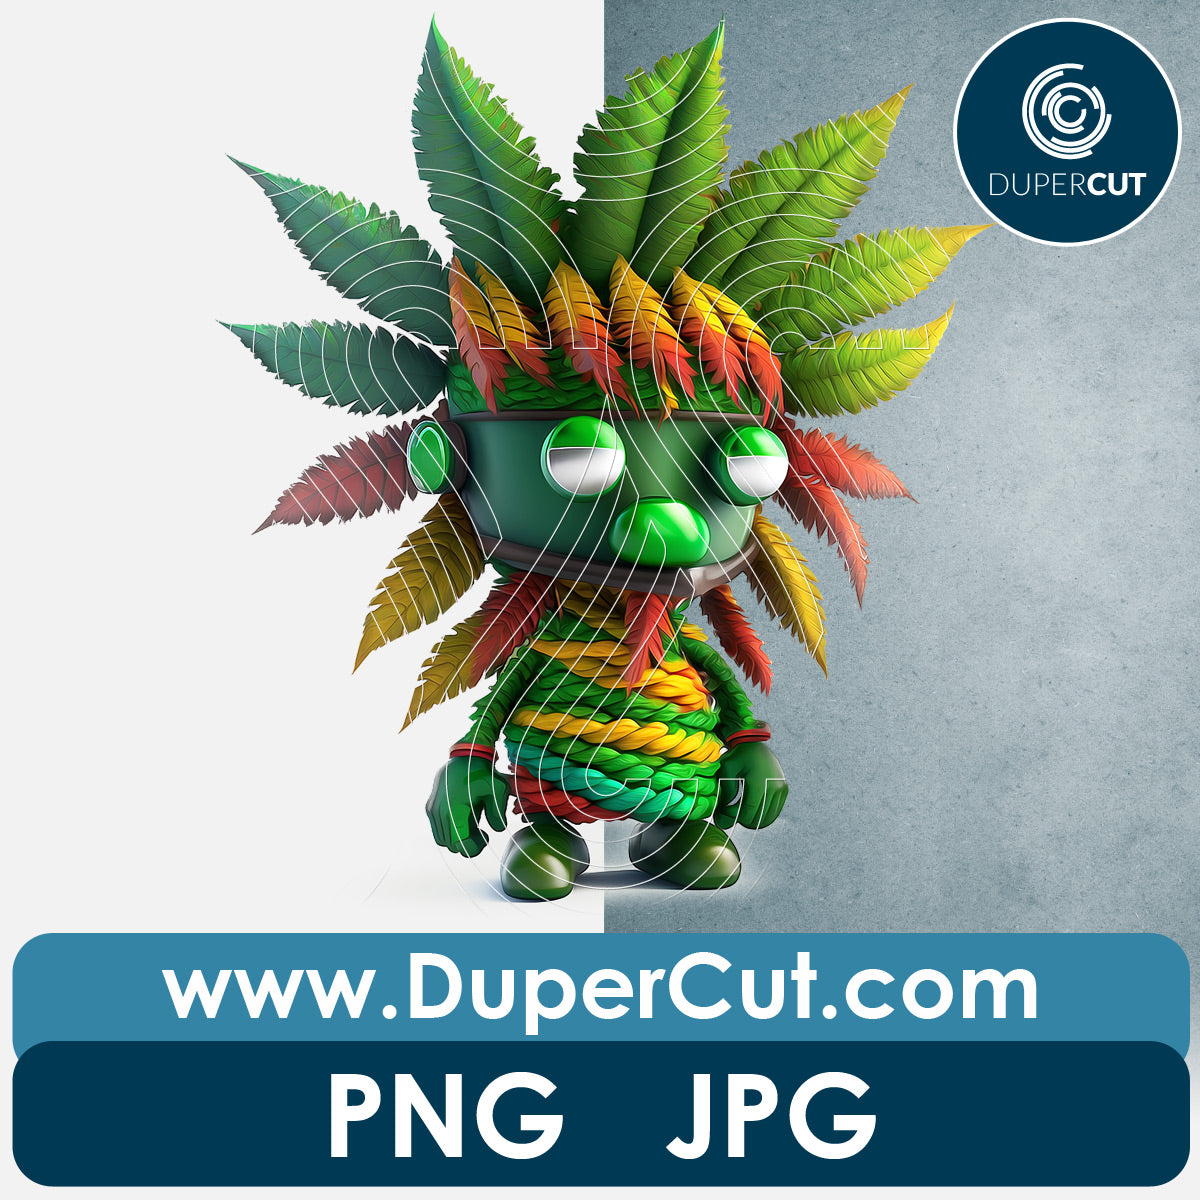 Marijuana leaf character - full color sublimation design, print on demand illustration, transparent background, high resolution, by DuperCut.com